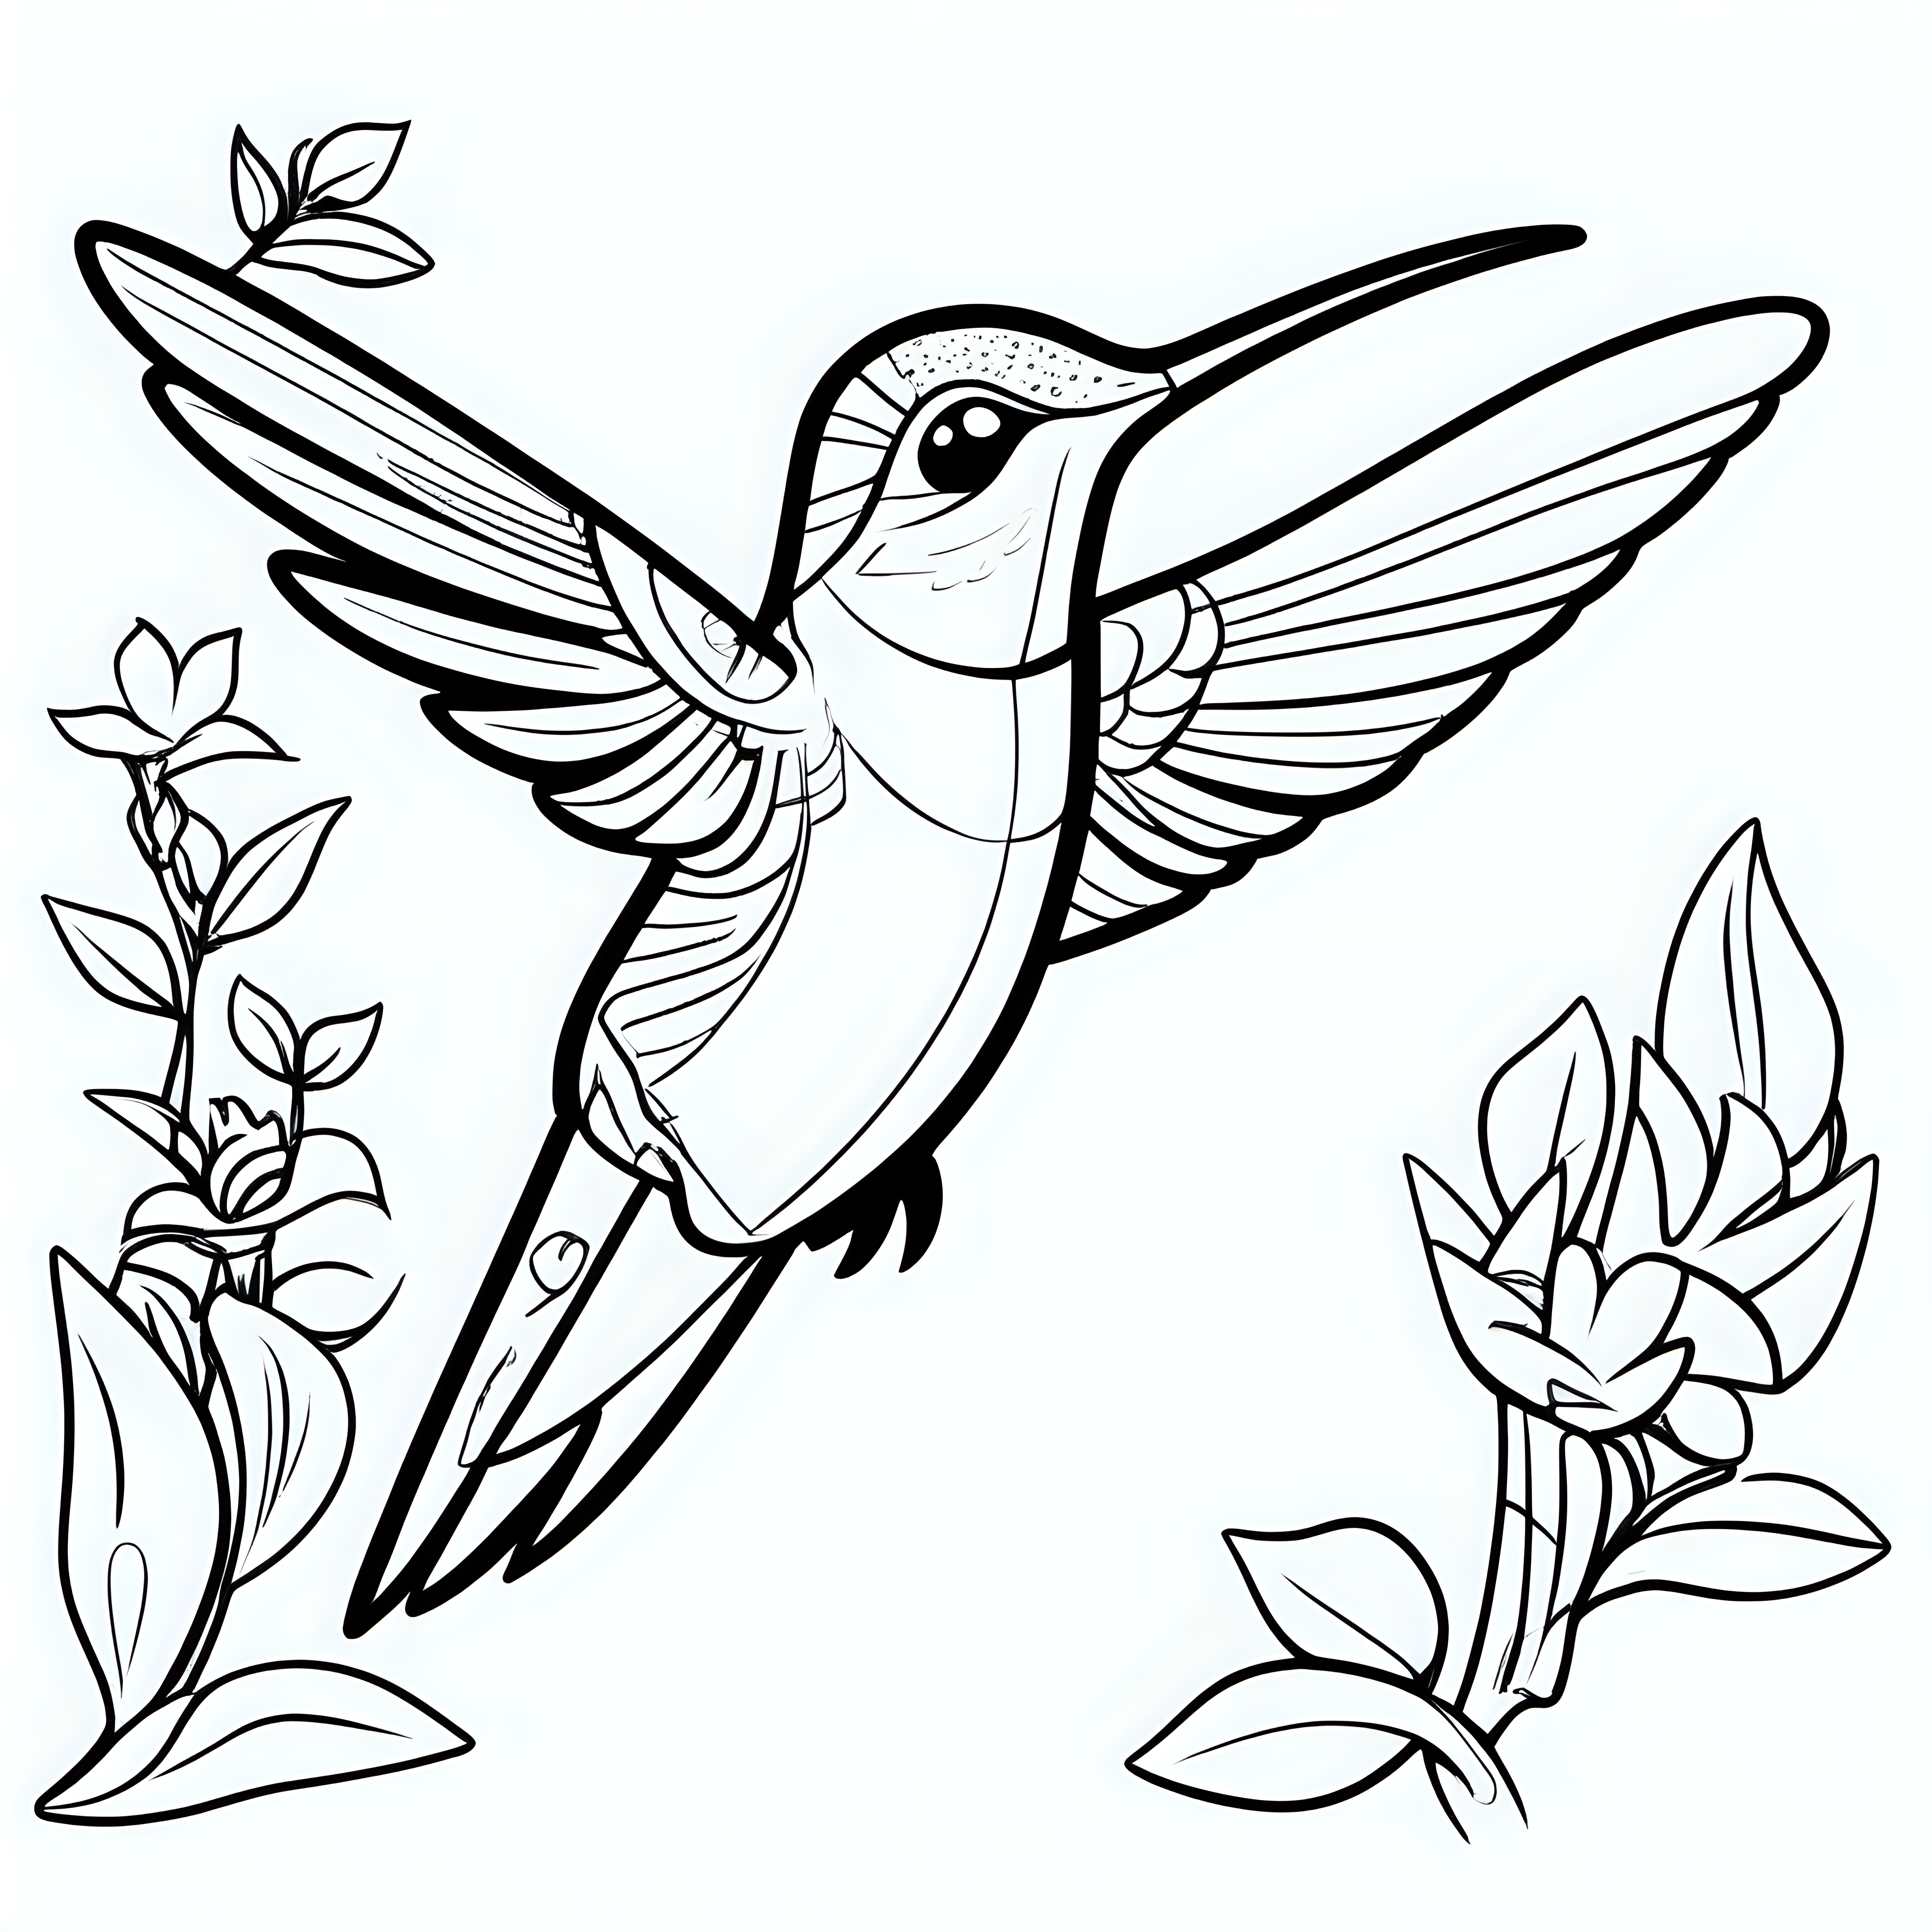 Create a cute Hummingbird bird outline in black